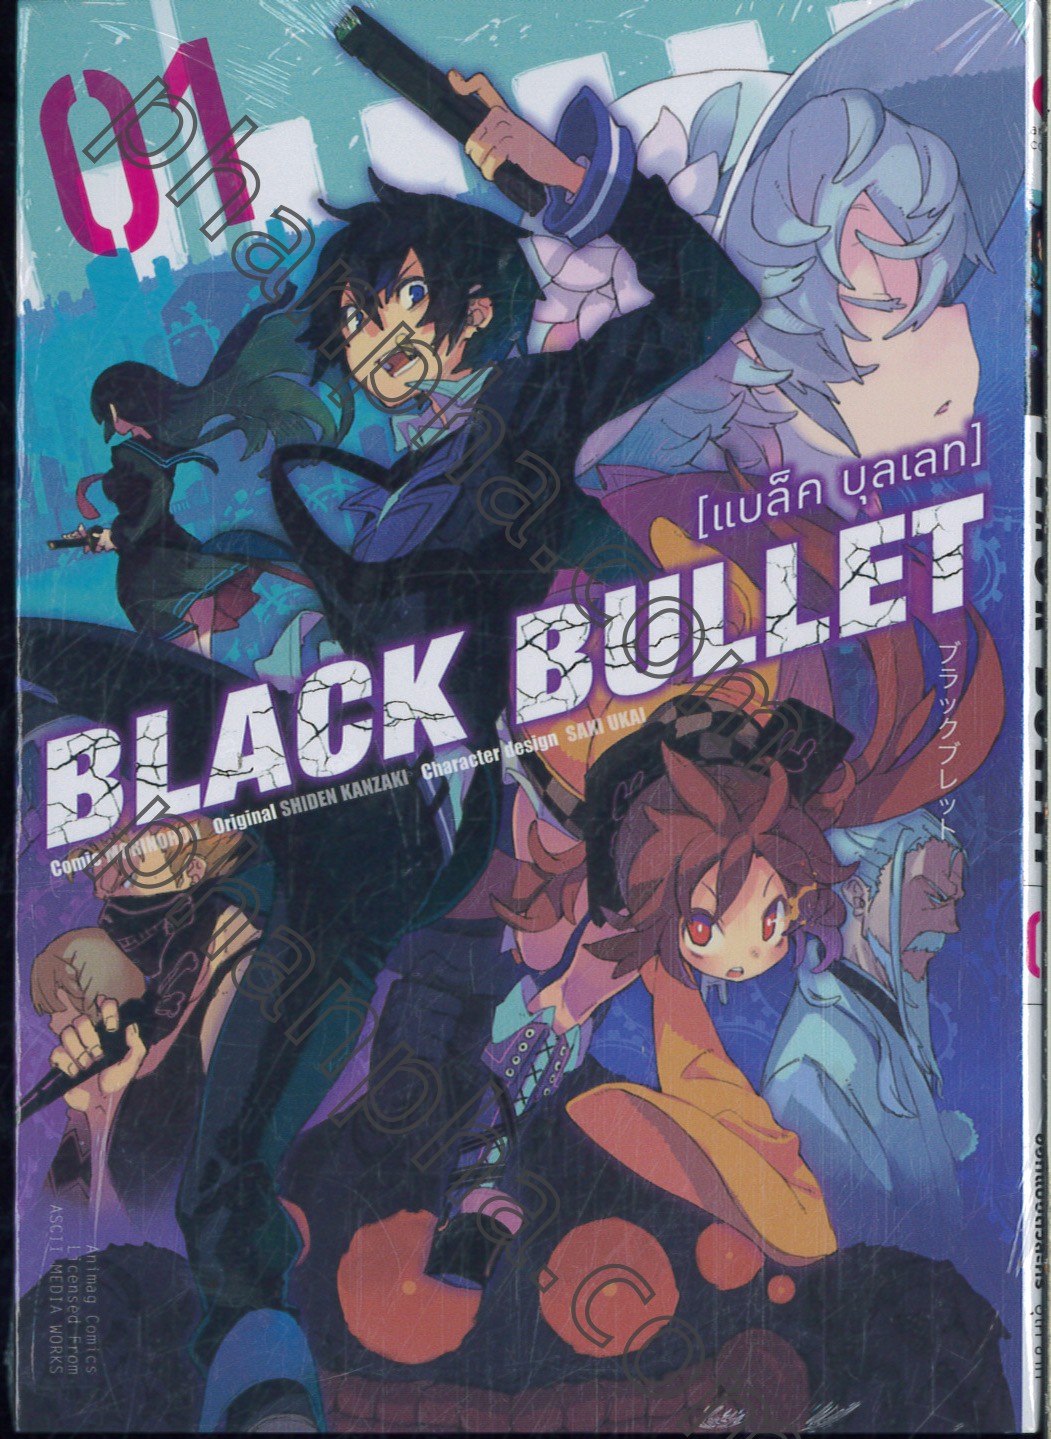 Books Kinokuniya: 1 เหล่าผู้มุ่งสู่พระเจ้า : Black Bullet แบล็ค บุ